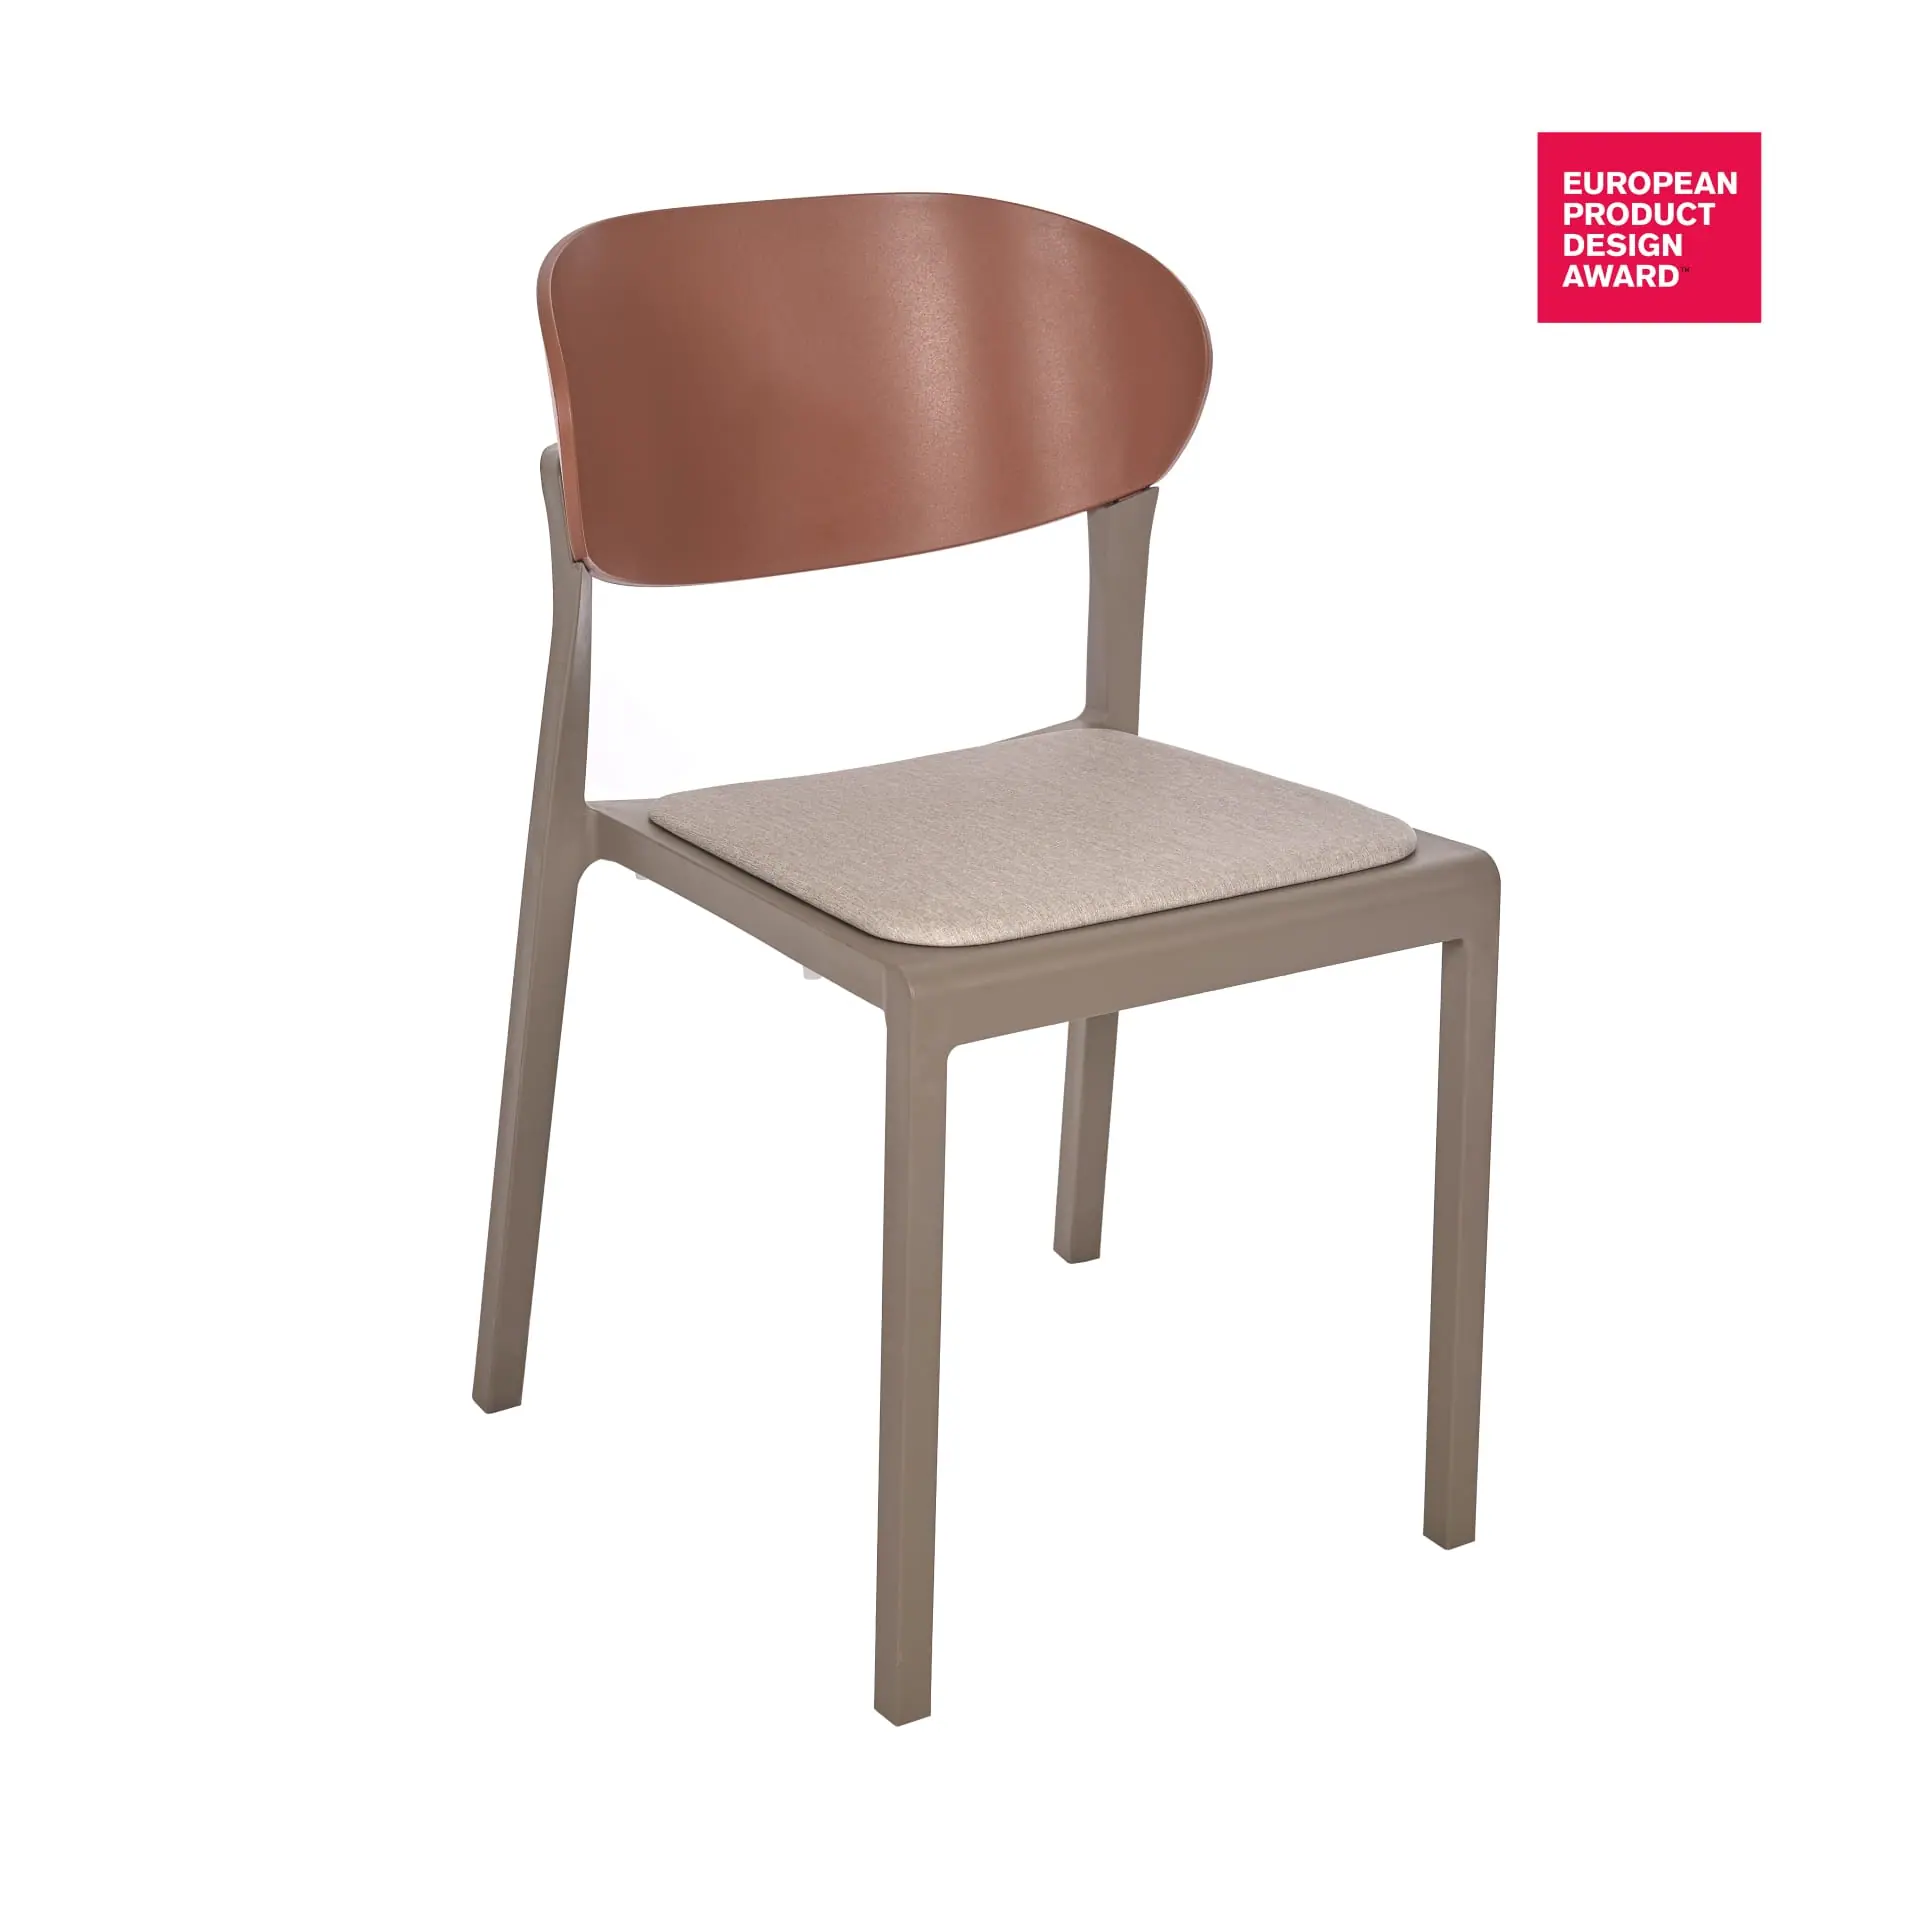 ezpeleta-bake-pad-chair-european-product-design-award